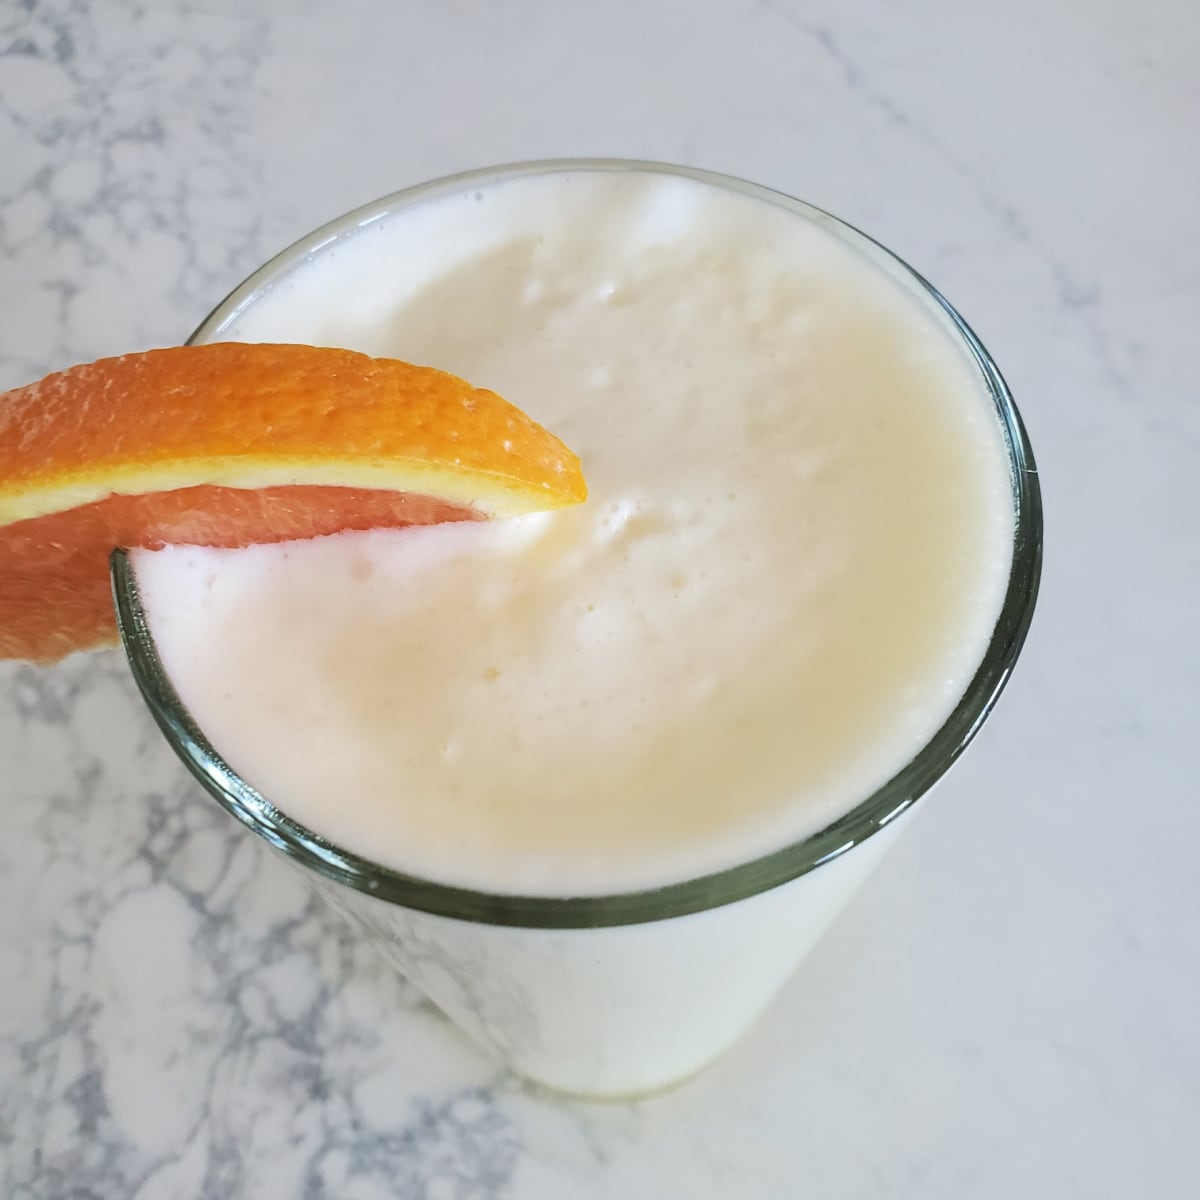 Copy Cat Orange Julius in a tall glass with an orange garnish